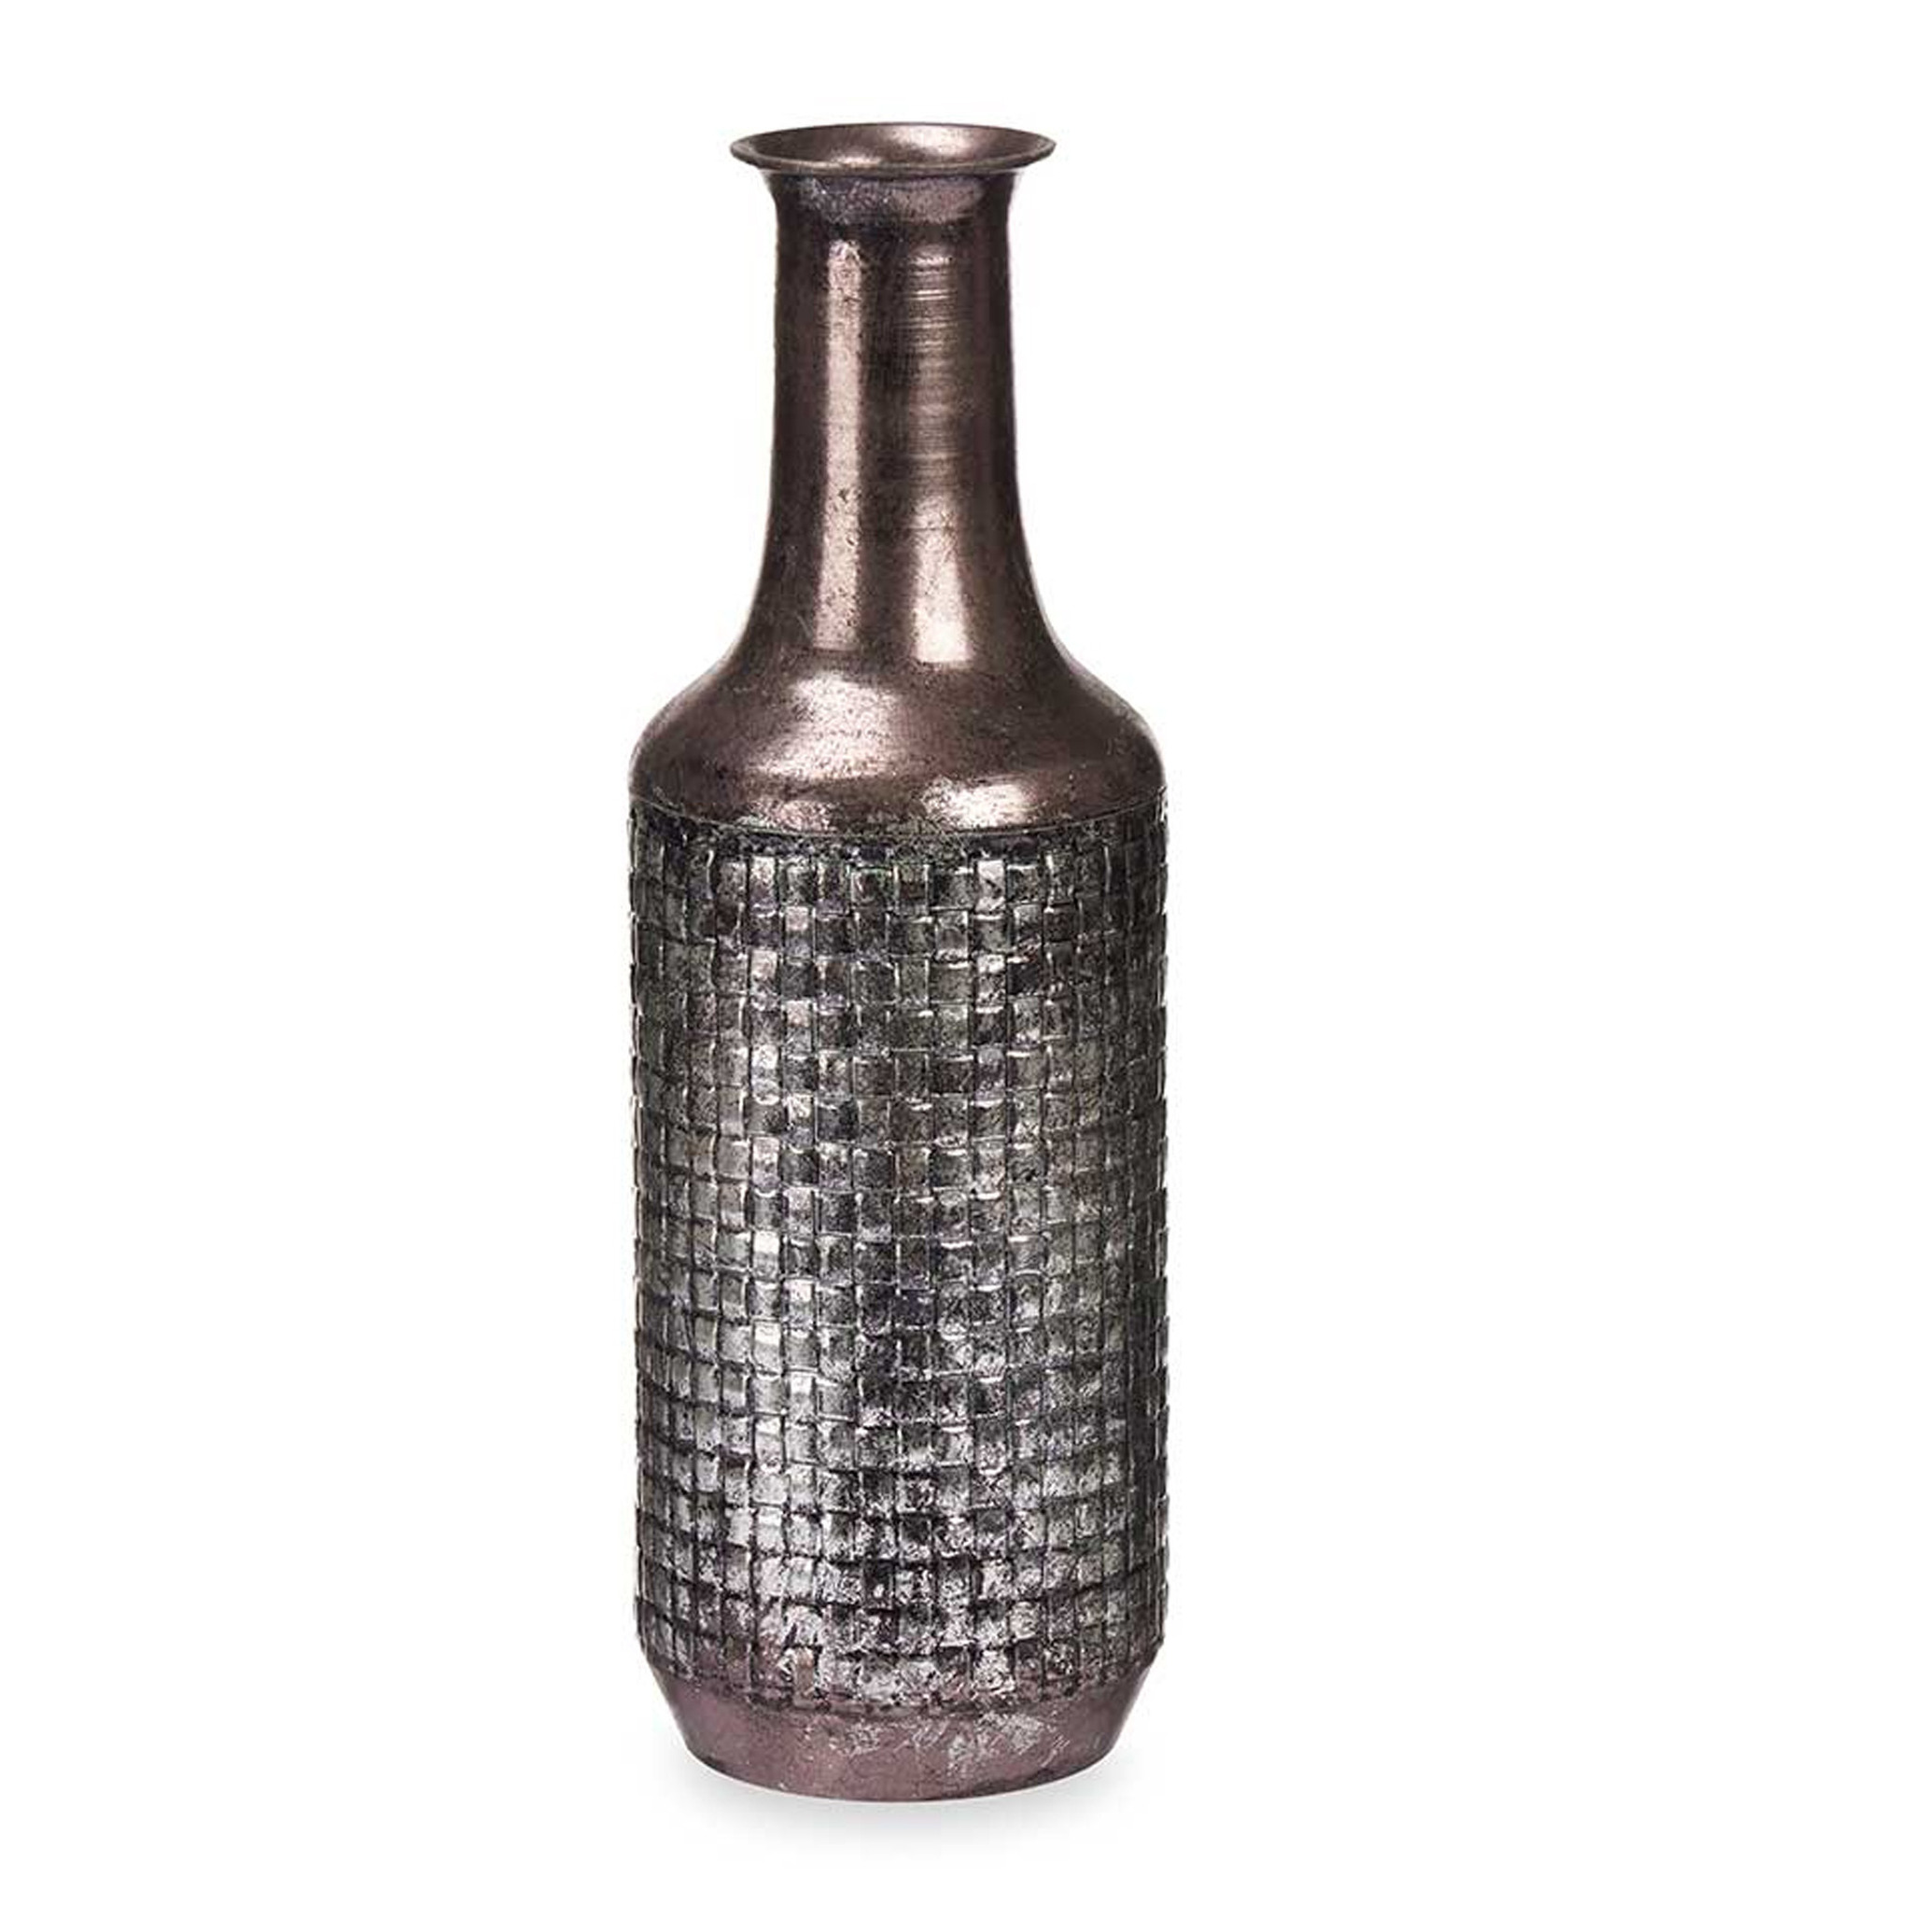 Giftdecor Bloemenvaas Antique Roman - zilver/brons - metaal - D14 x H46 cm -